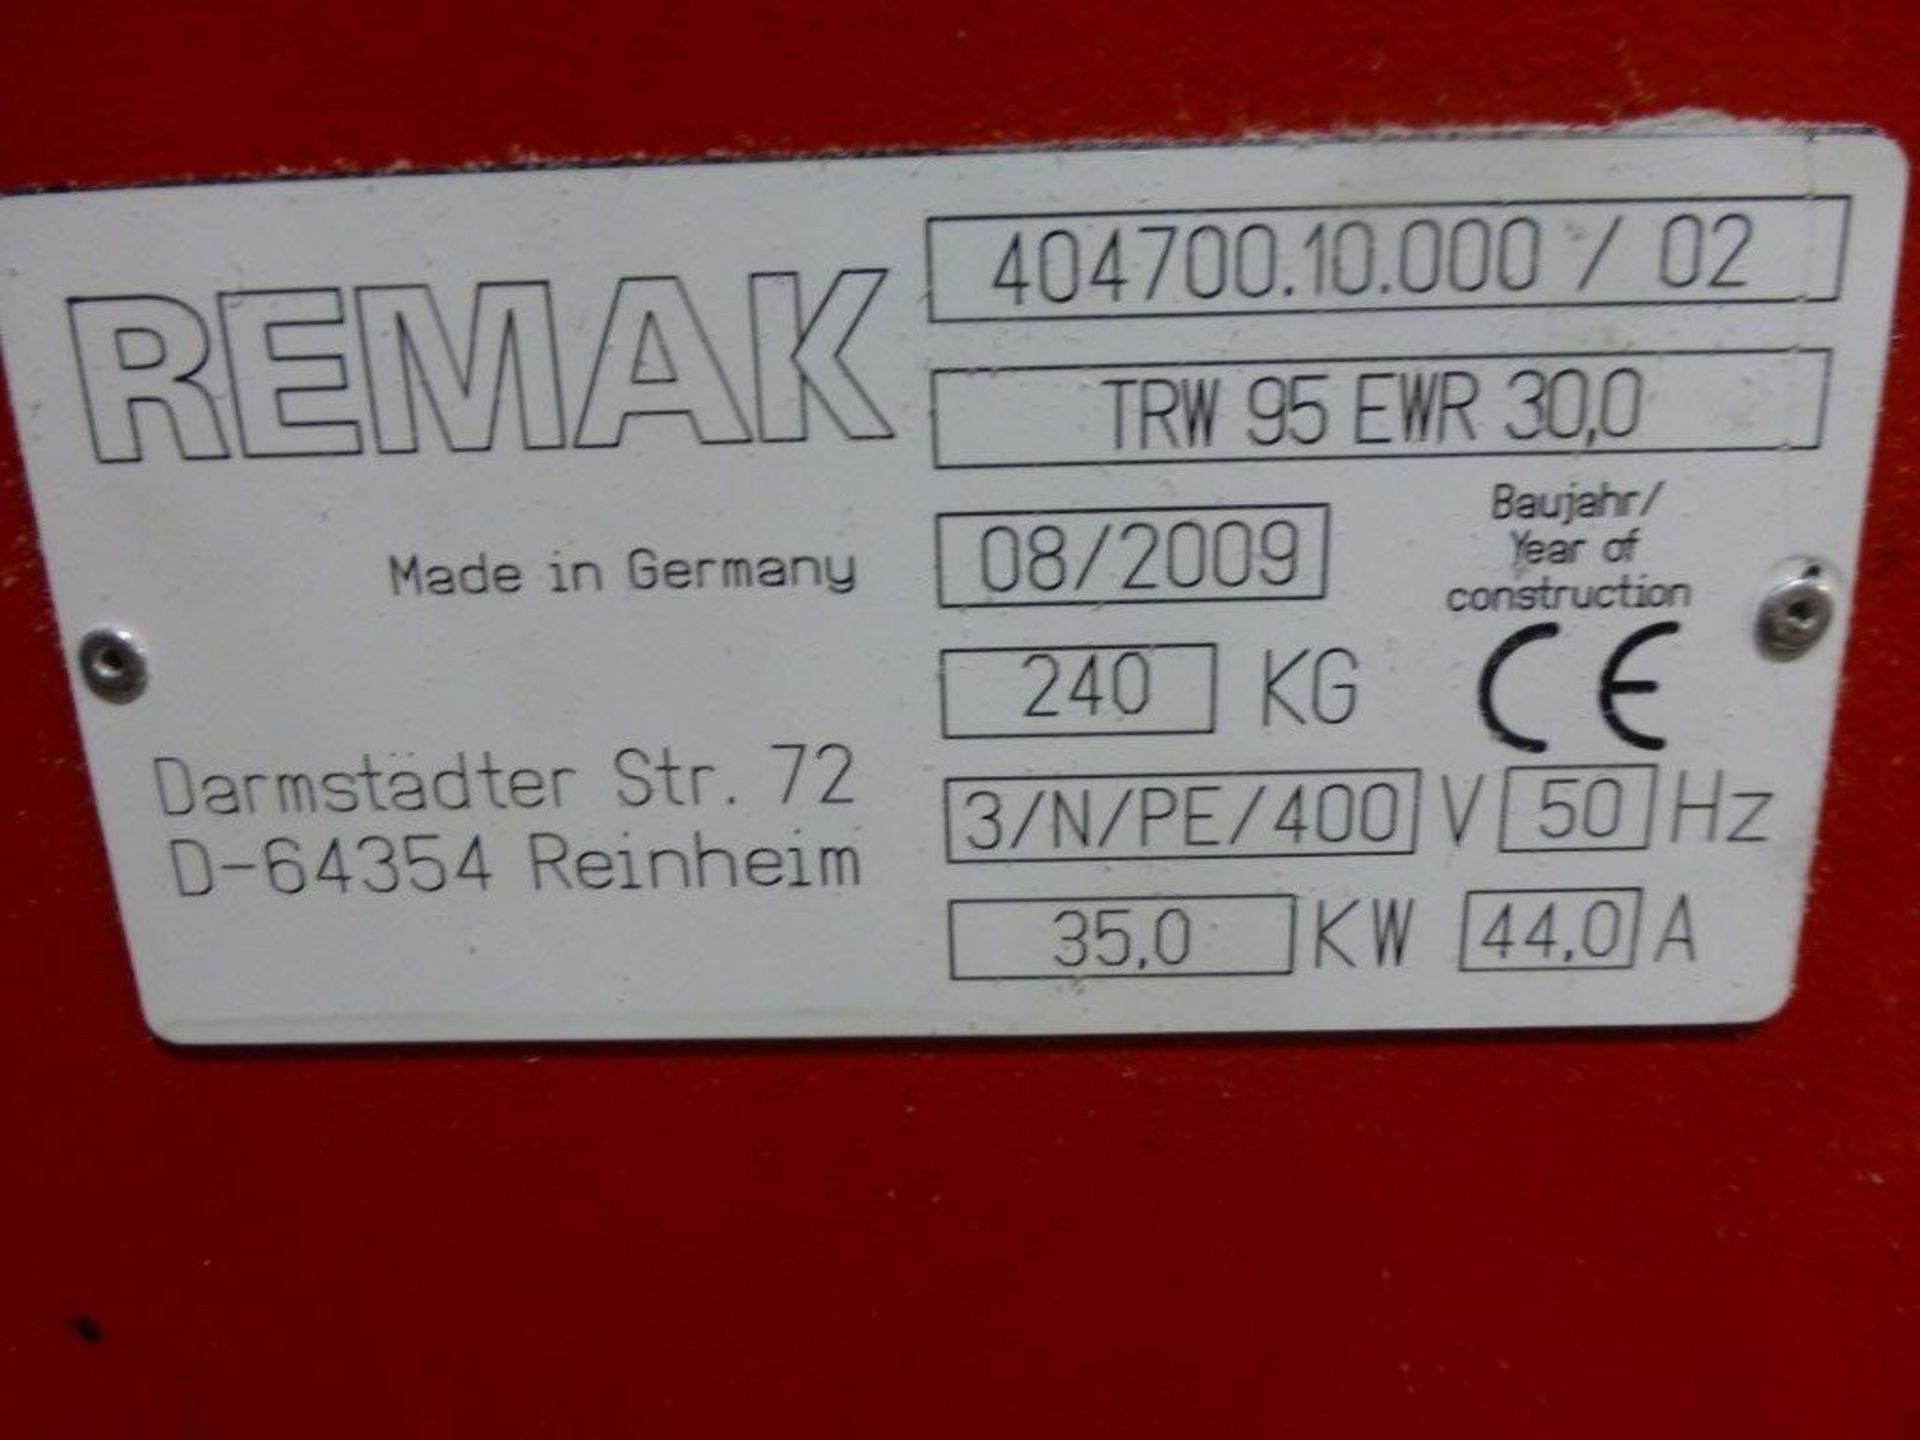 Remak TRW95/EWR 30.0 temperature control unit, serial No 404700.10.000/02 (A Risk Assessment and - Image 3 of 3